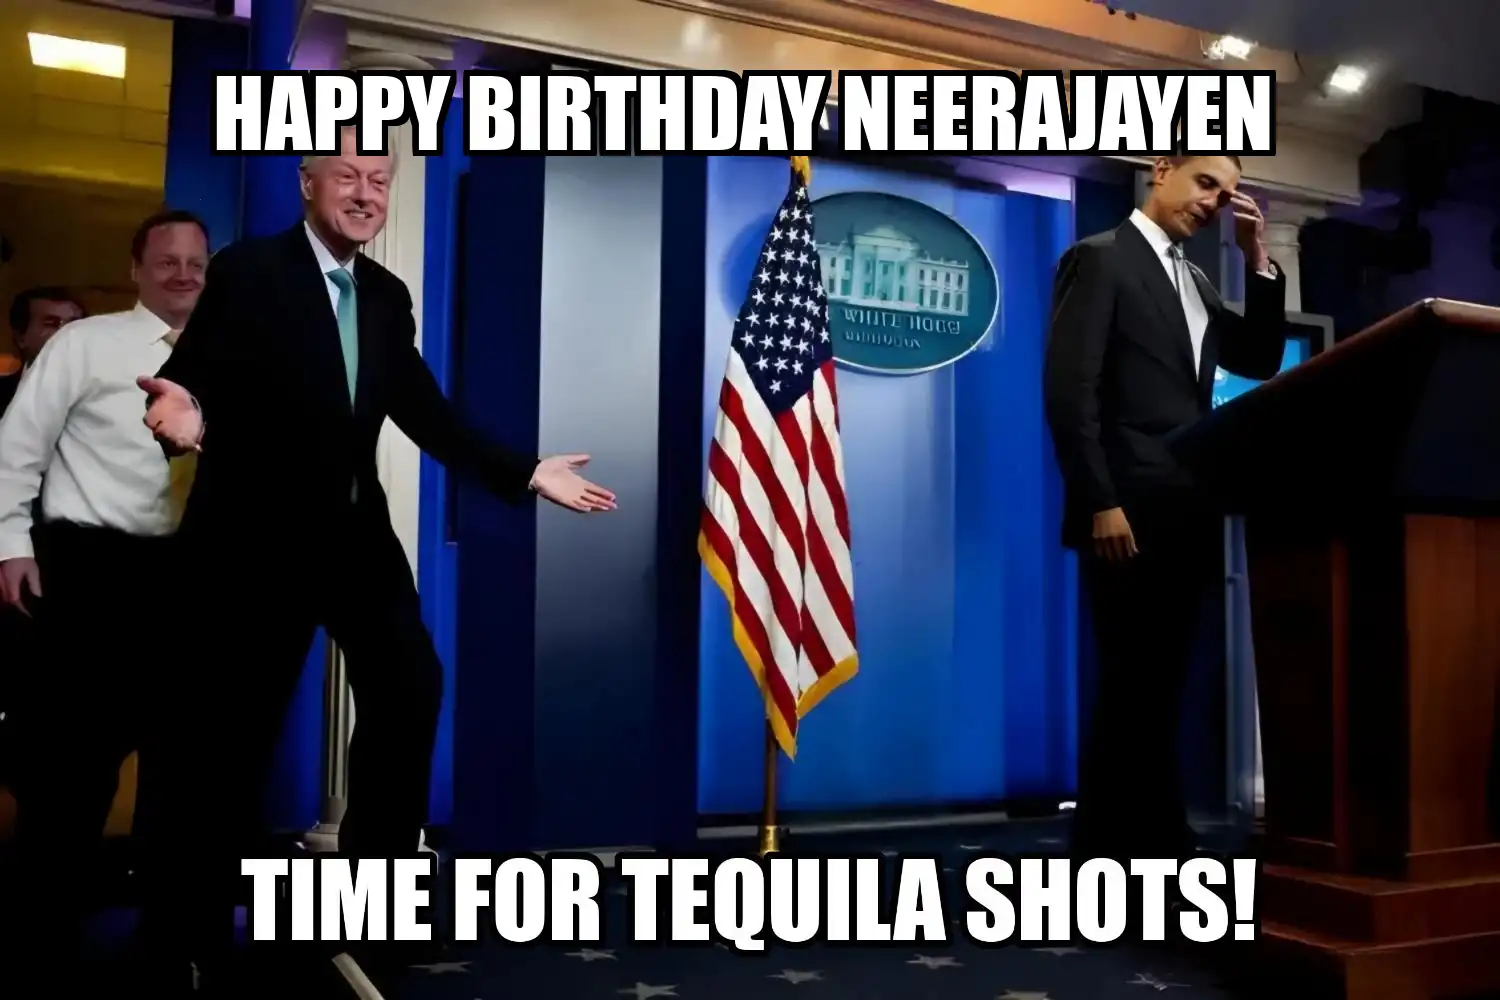 Happy Birthday Neerajayen Time For Tequila Shots Memes